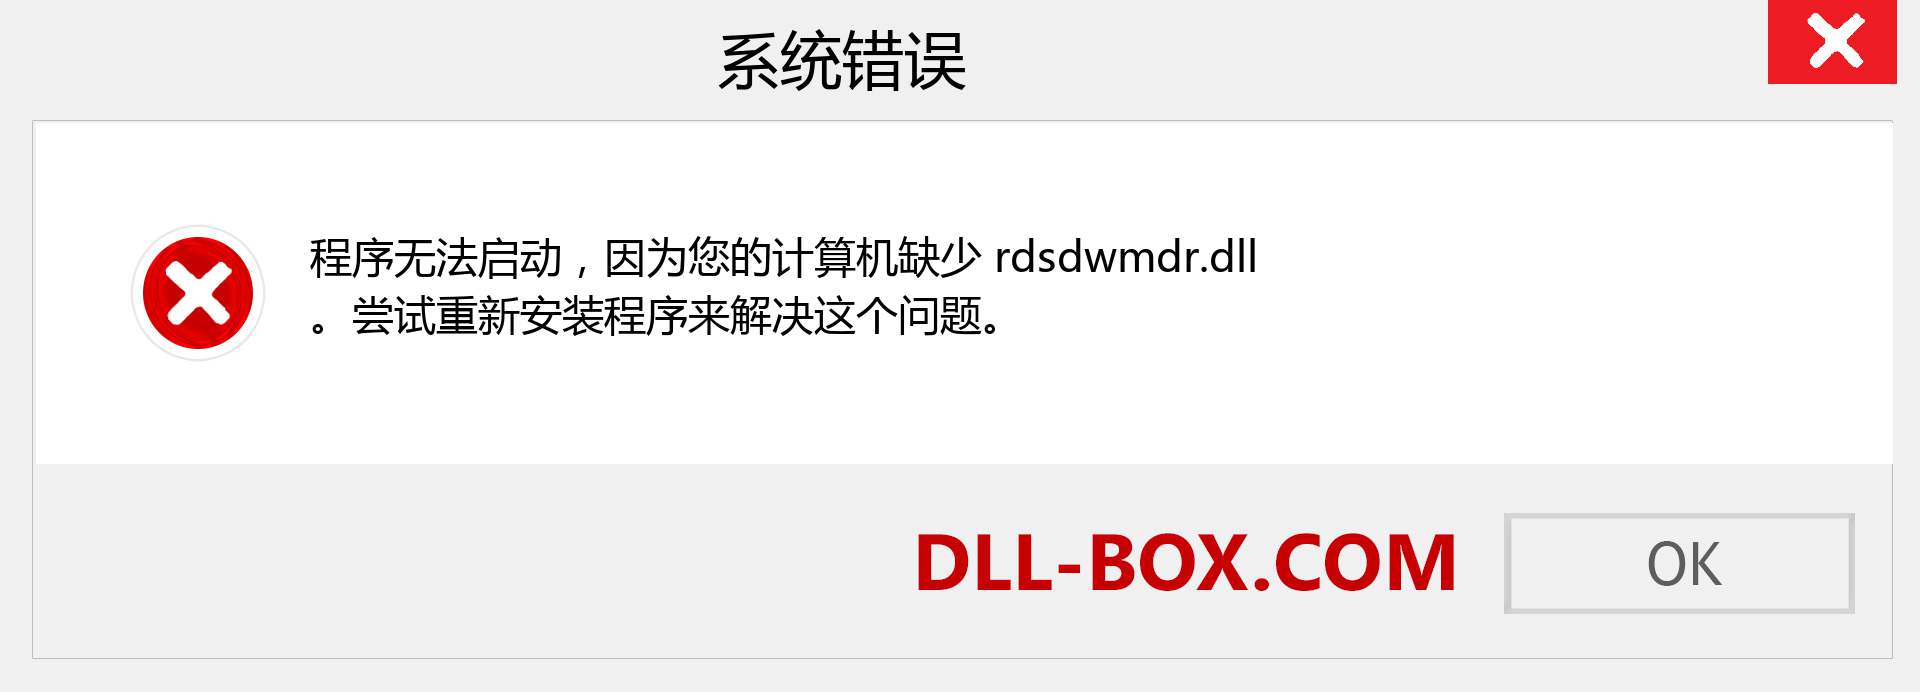 rdsdwmdr.dll 文件丢失？。 适用于 Windows 7、8、10 的下载 - 修复 Windows、照片、图像上的 rdsdwmdr dll 丢失错误